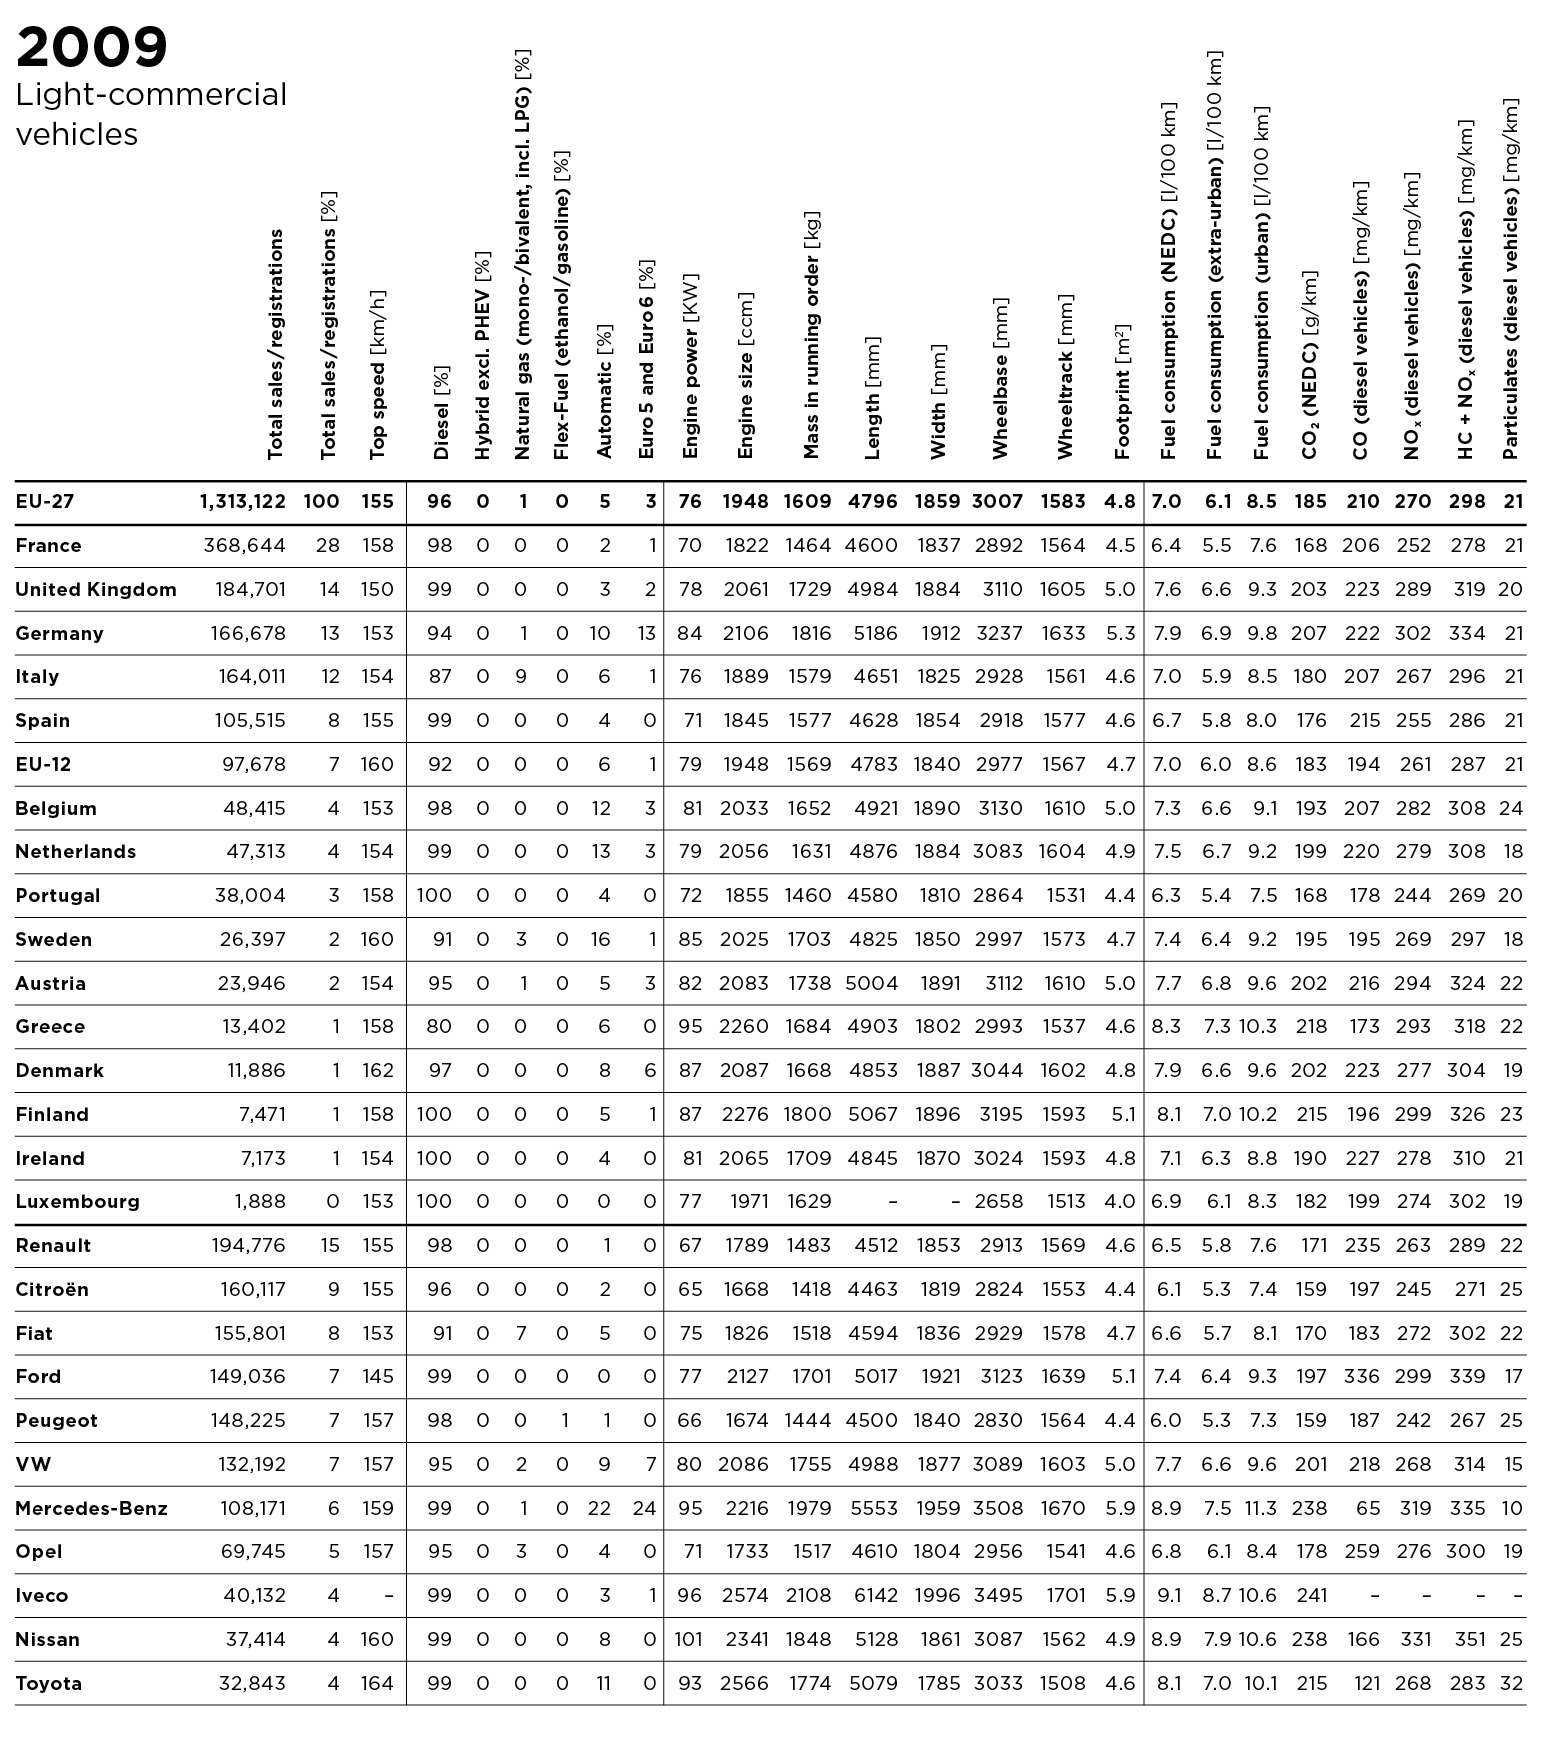 LCV 2009 data